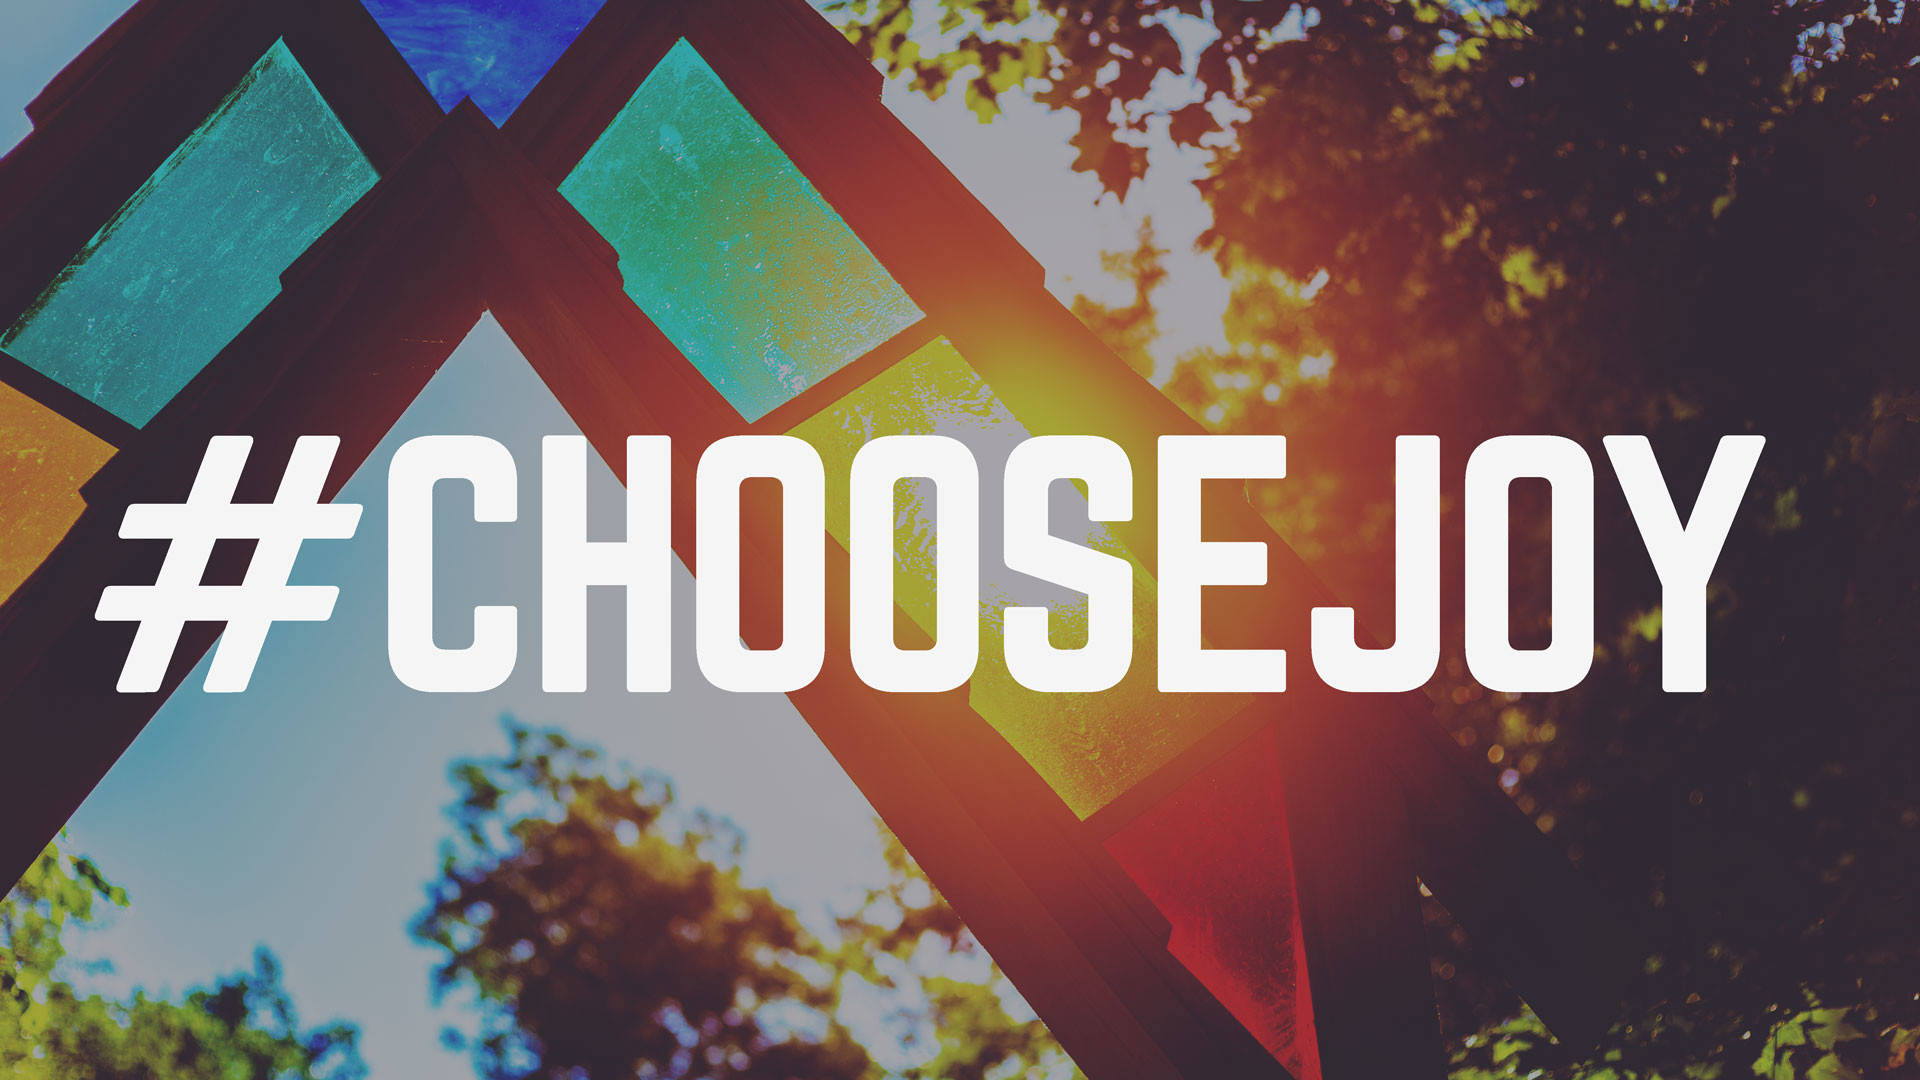 Choose Joy Hashtag Wallpaper